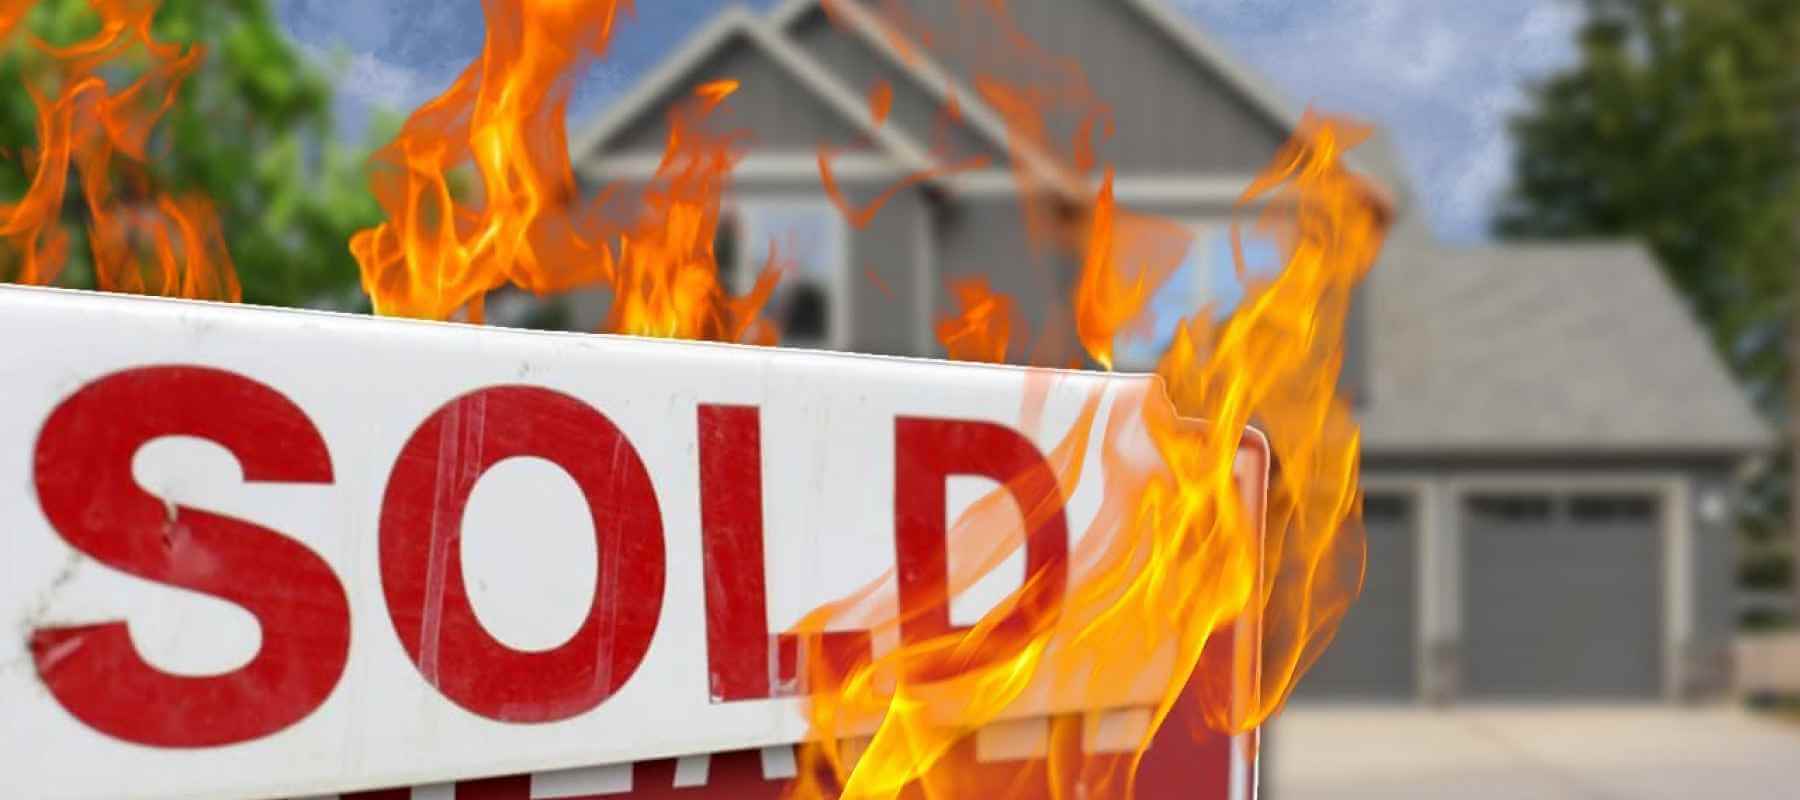 The Denver Housing Market is on Fire